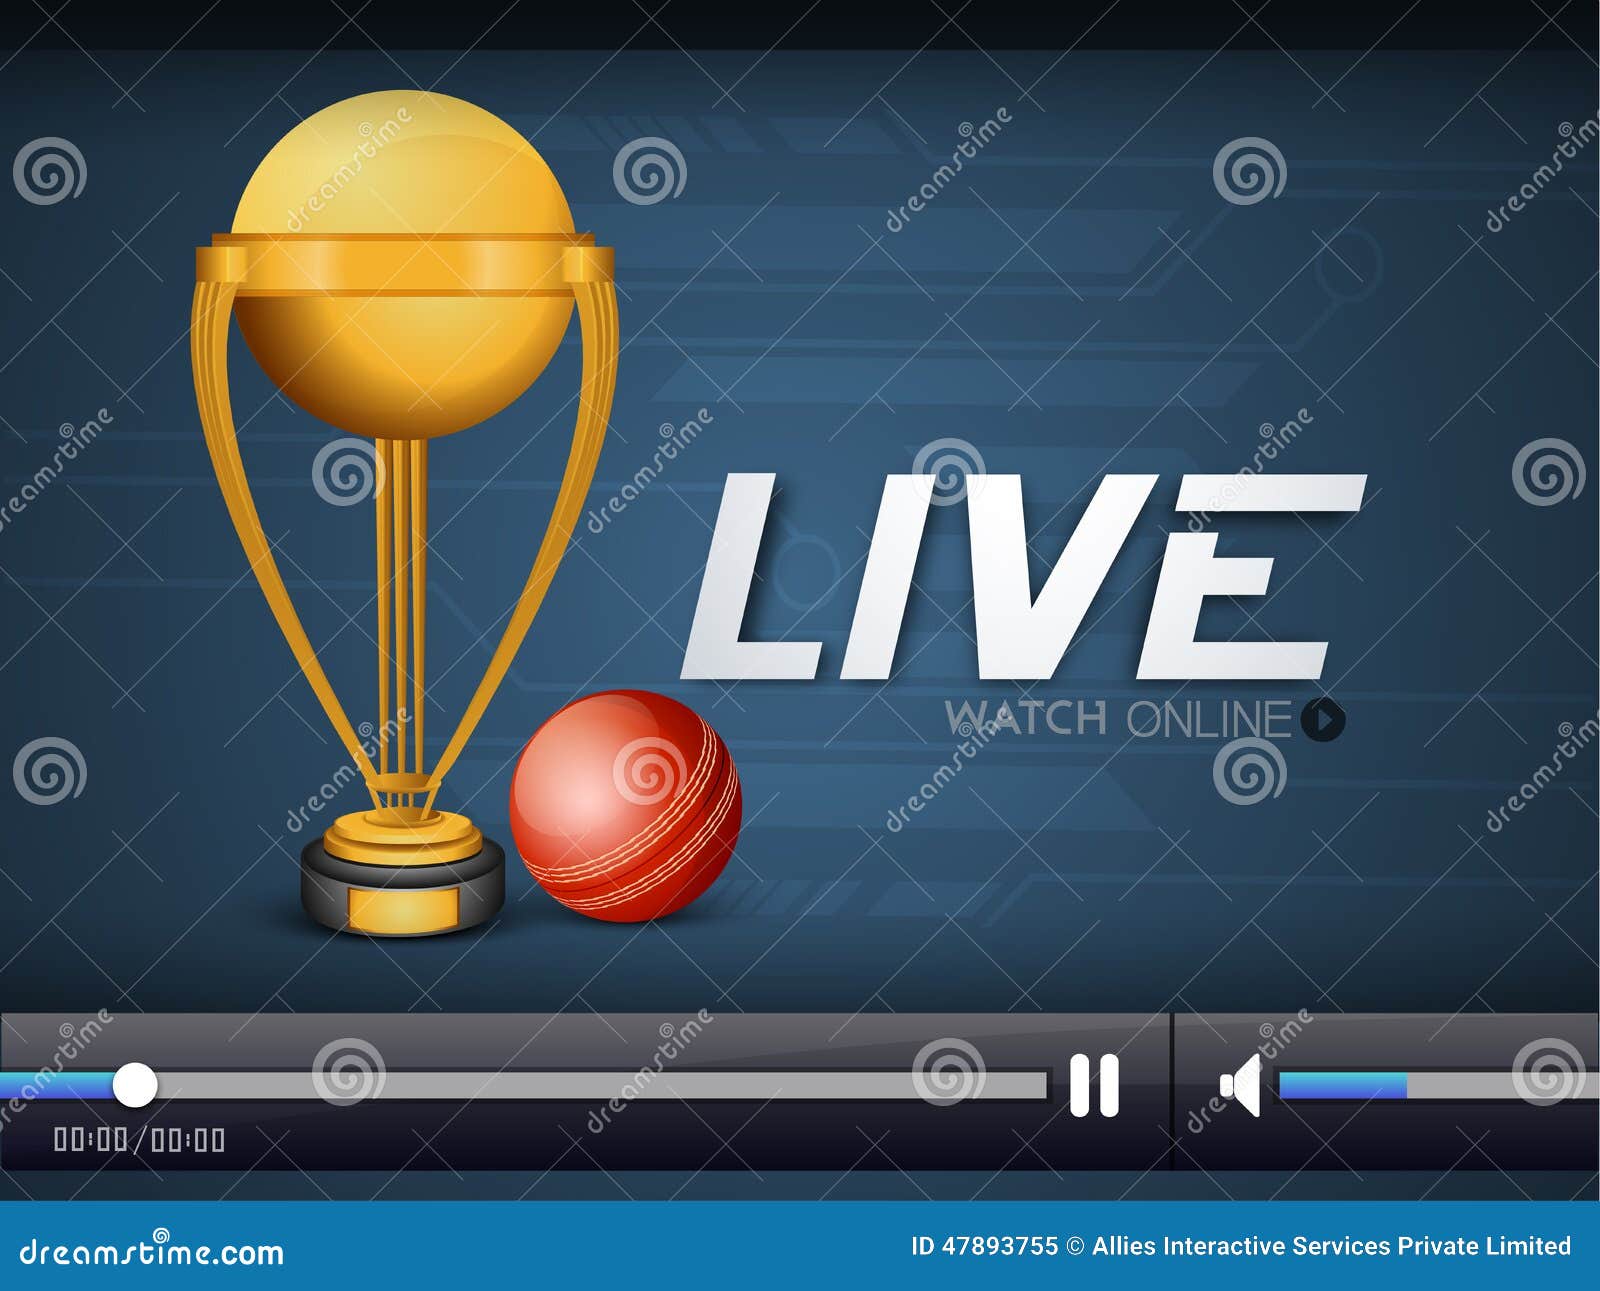 live cricket match online video